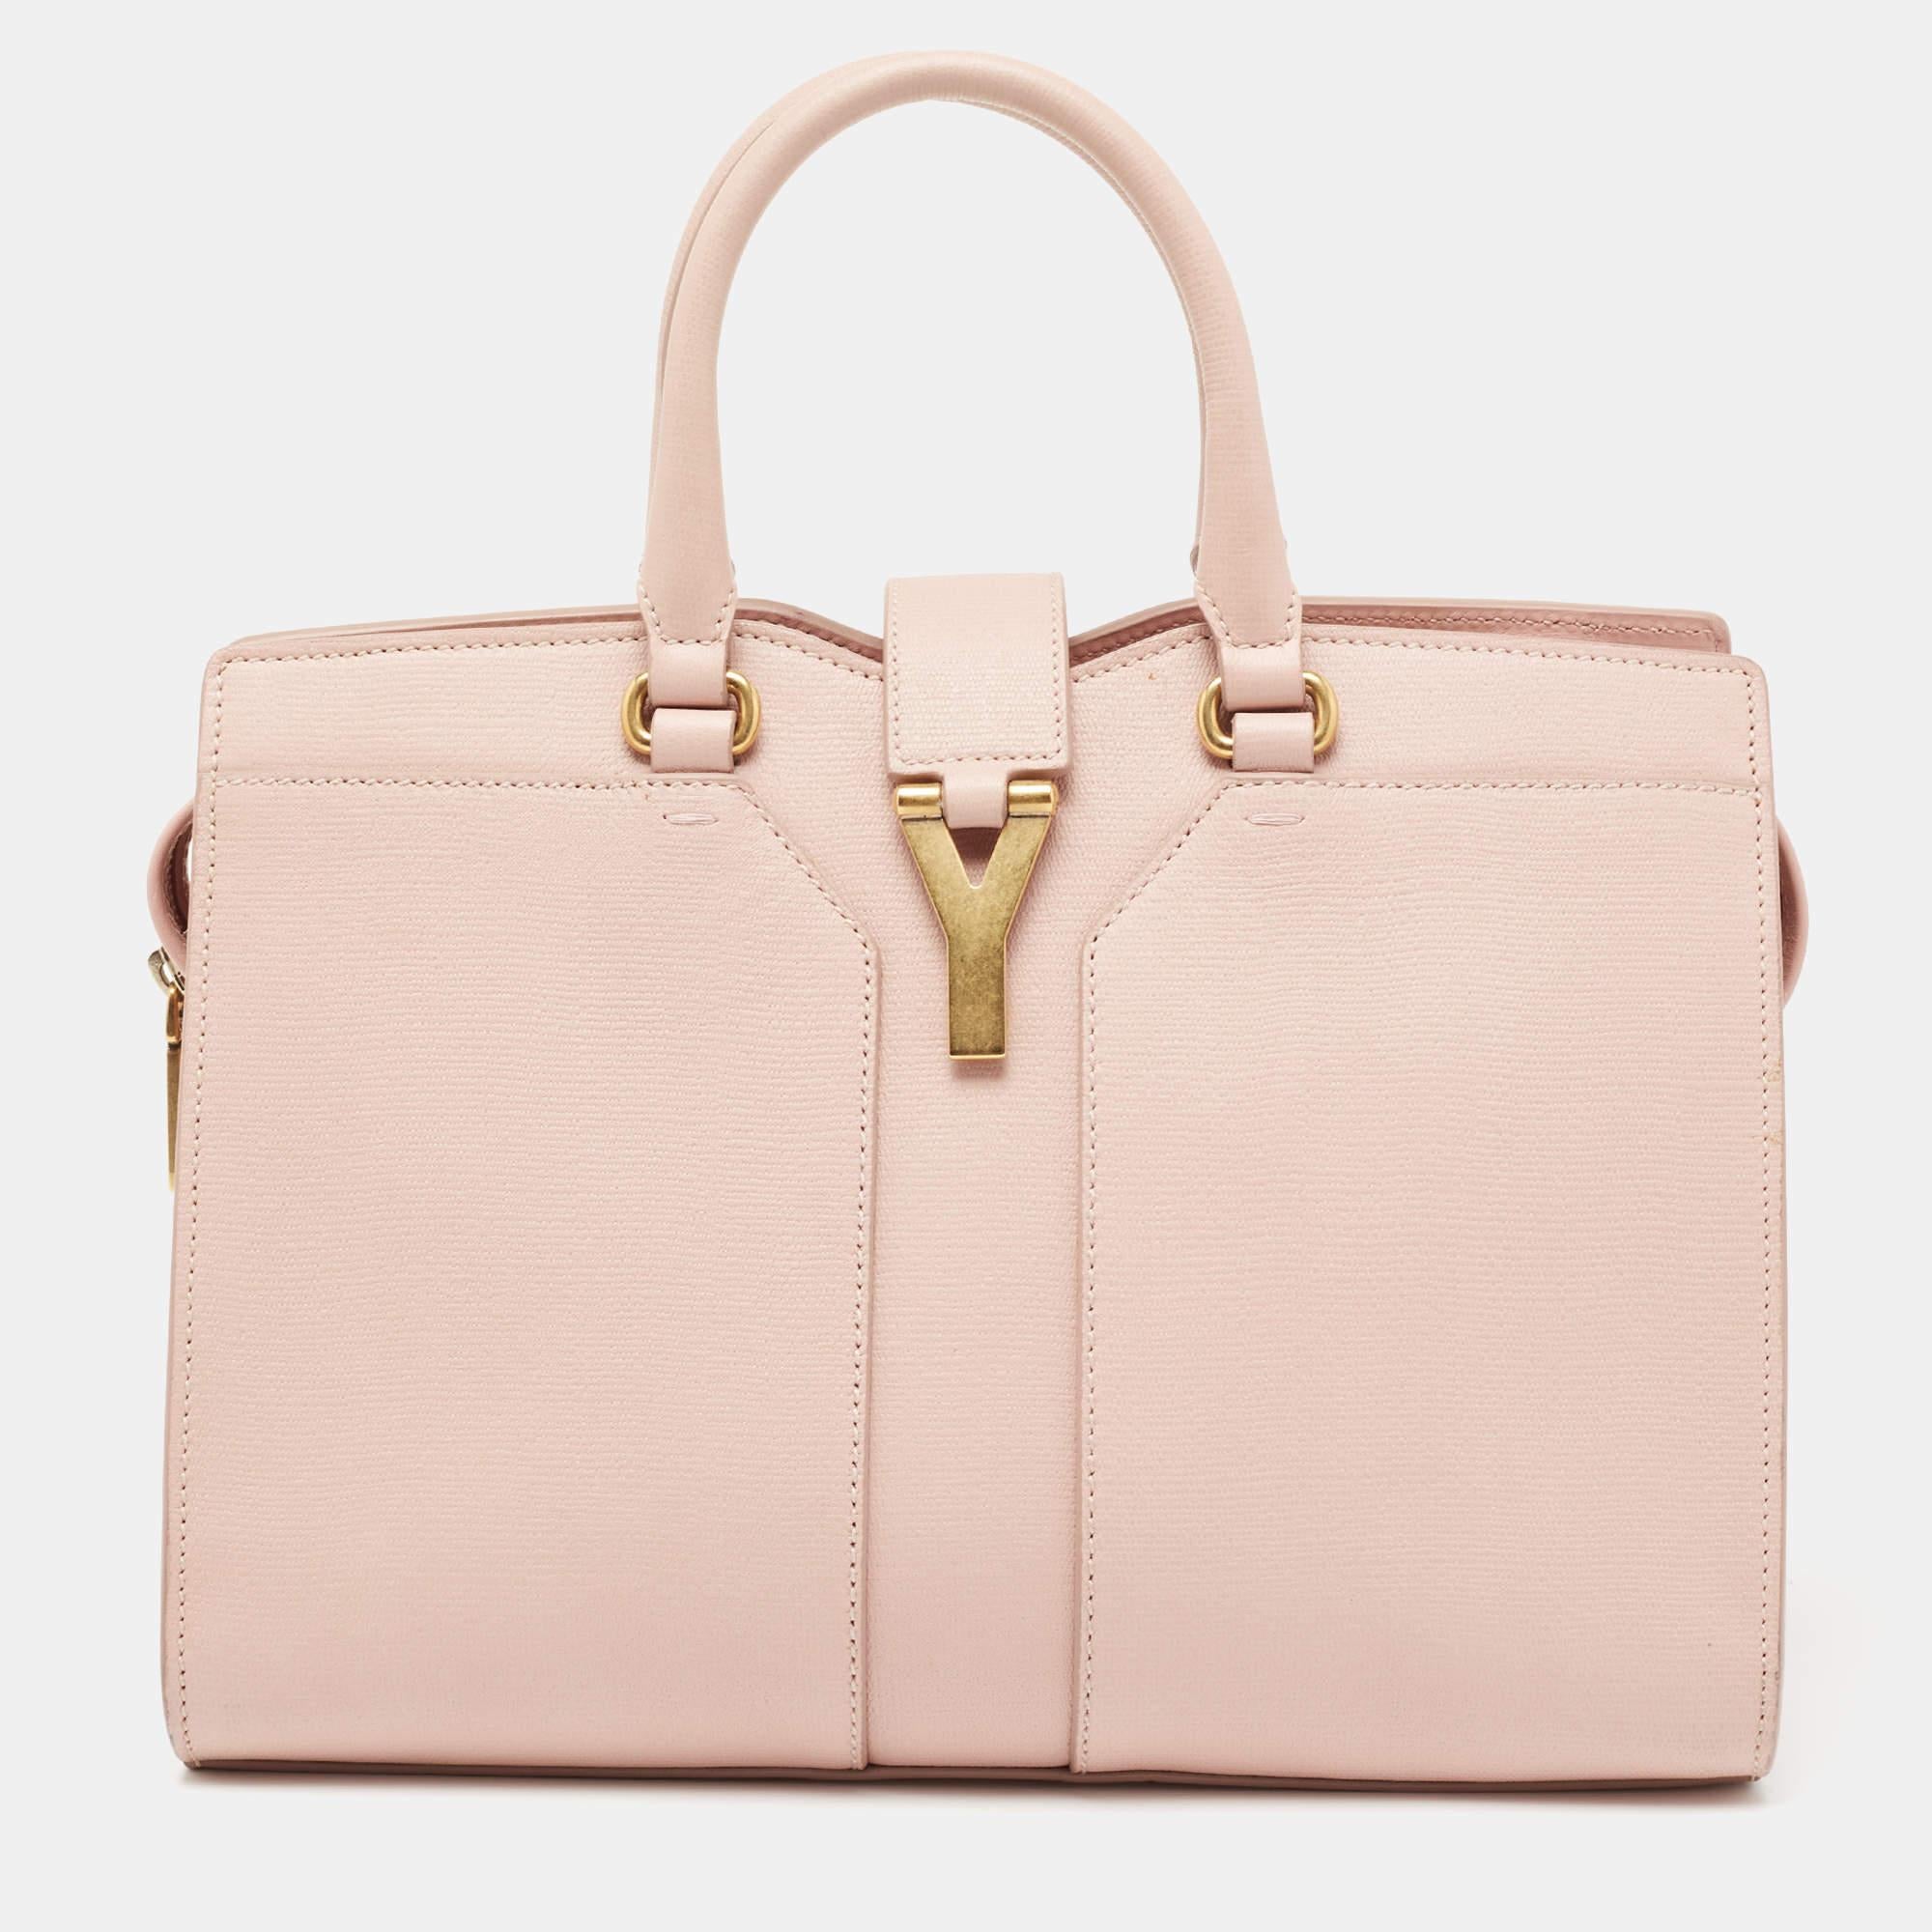 ysl pink bag